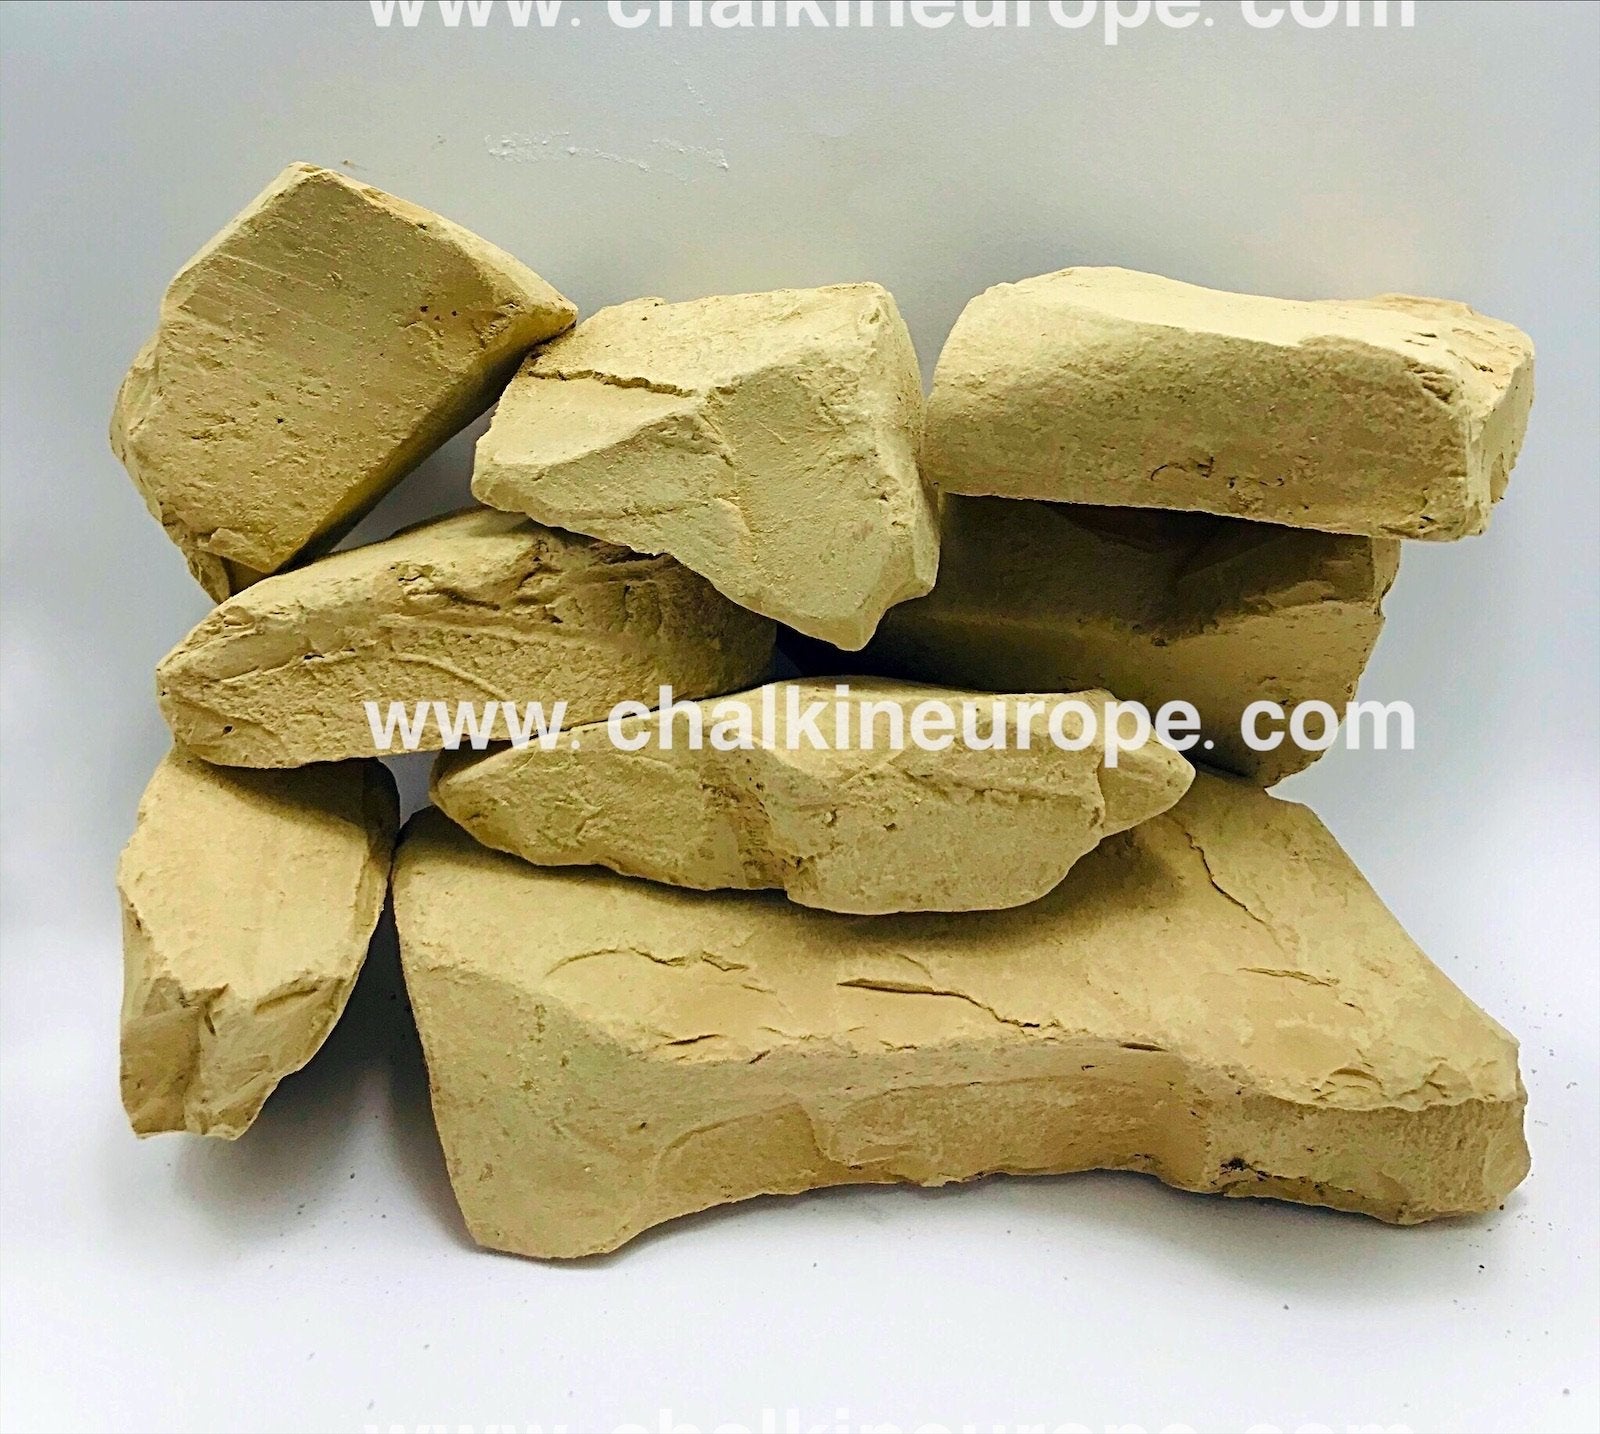 Turkestan Clay Edible Clay - Chalkineurope